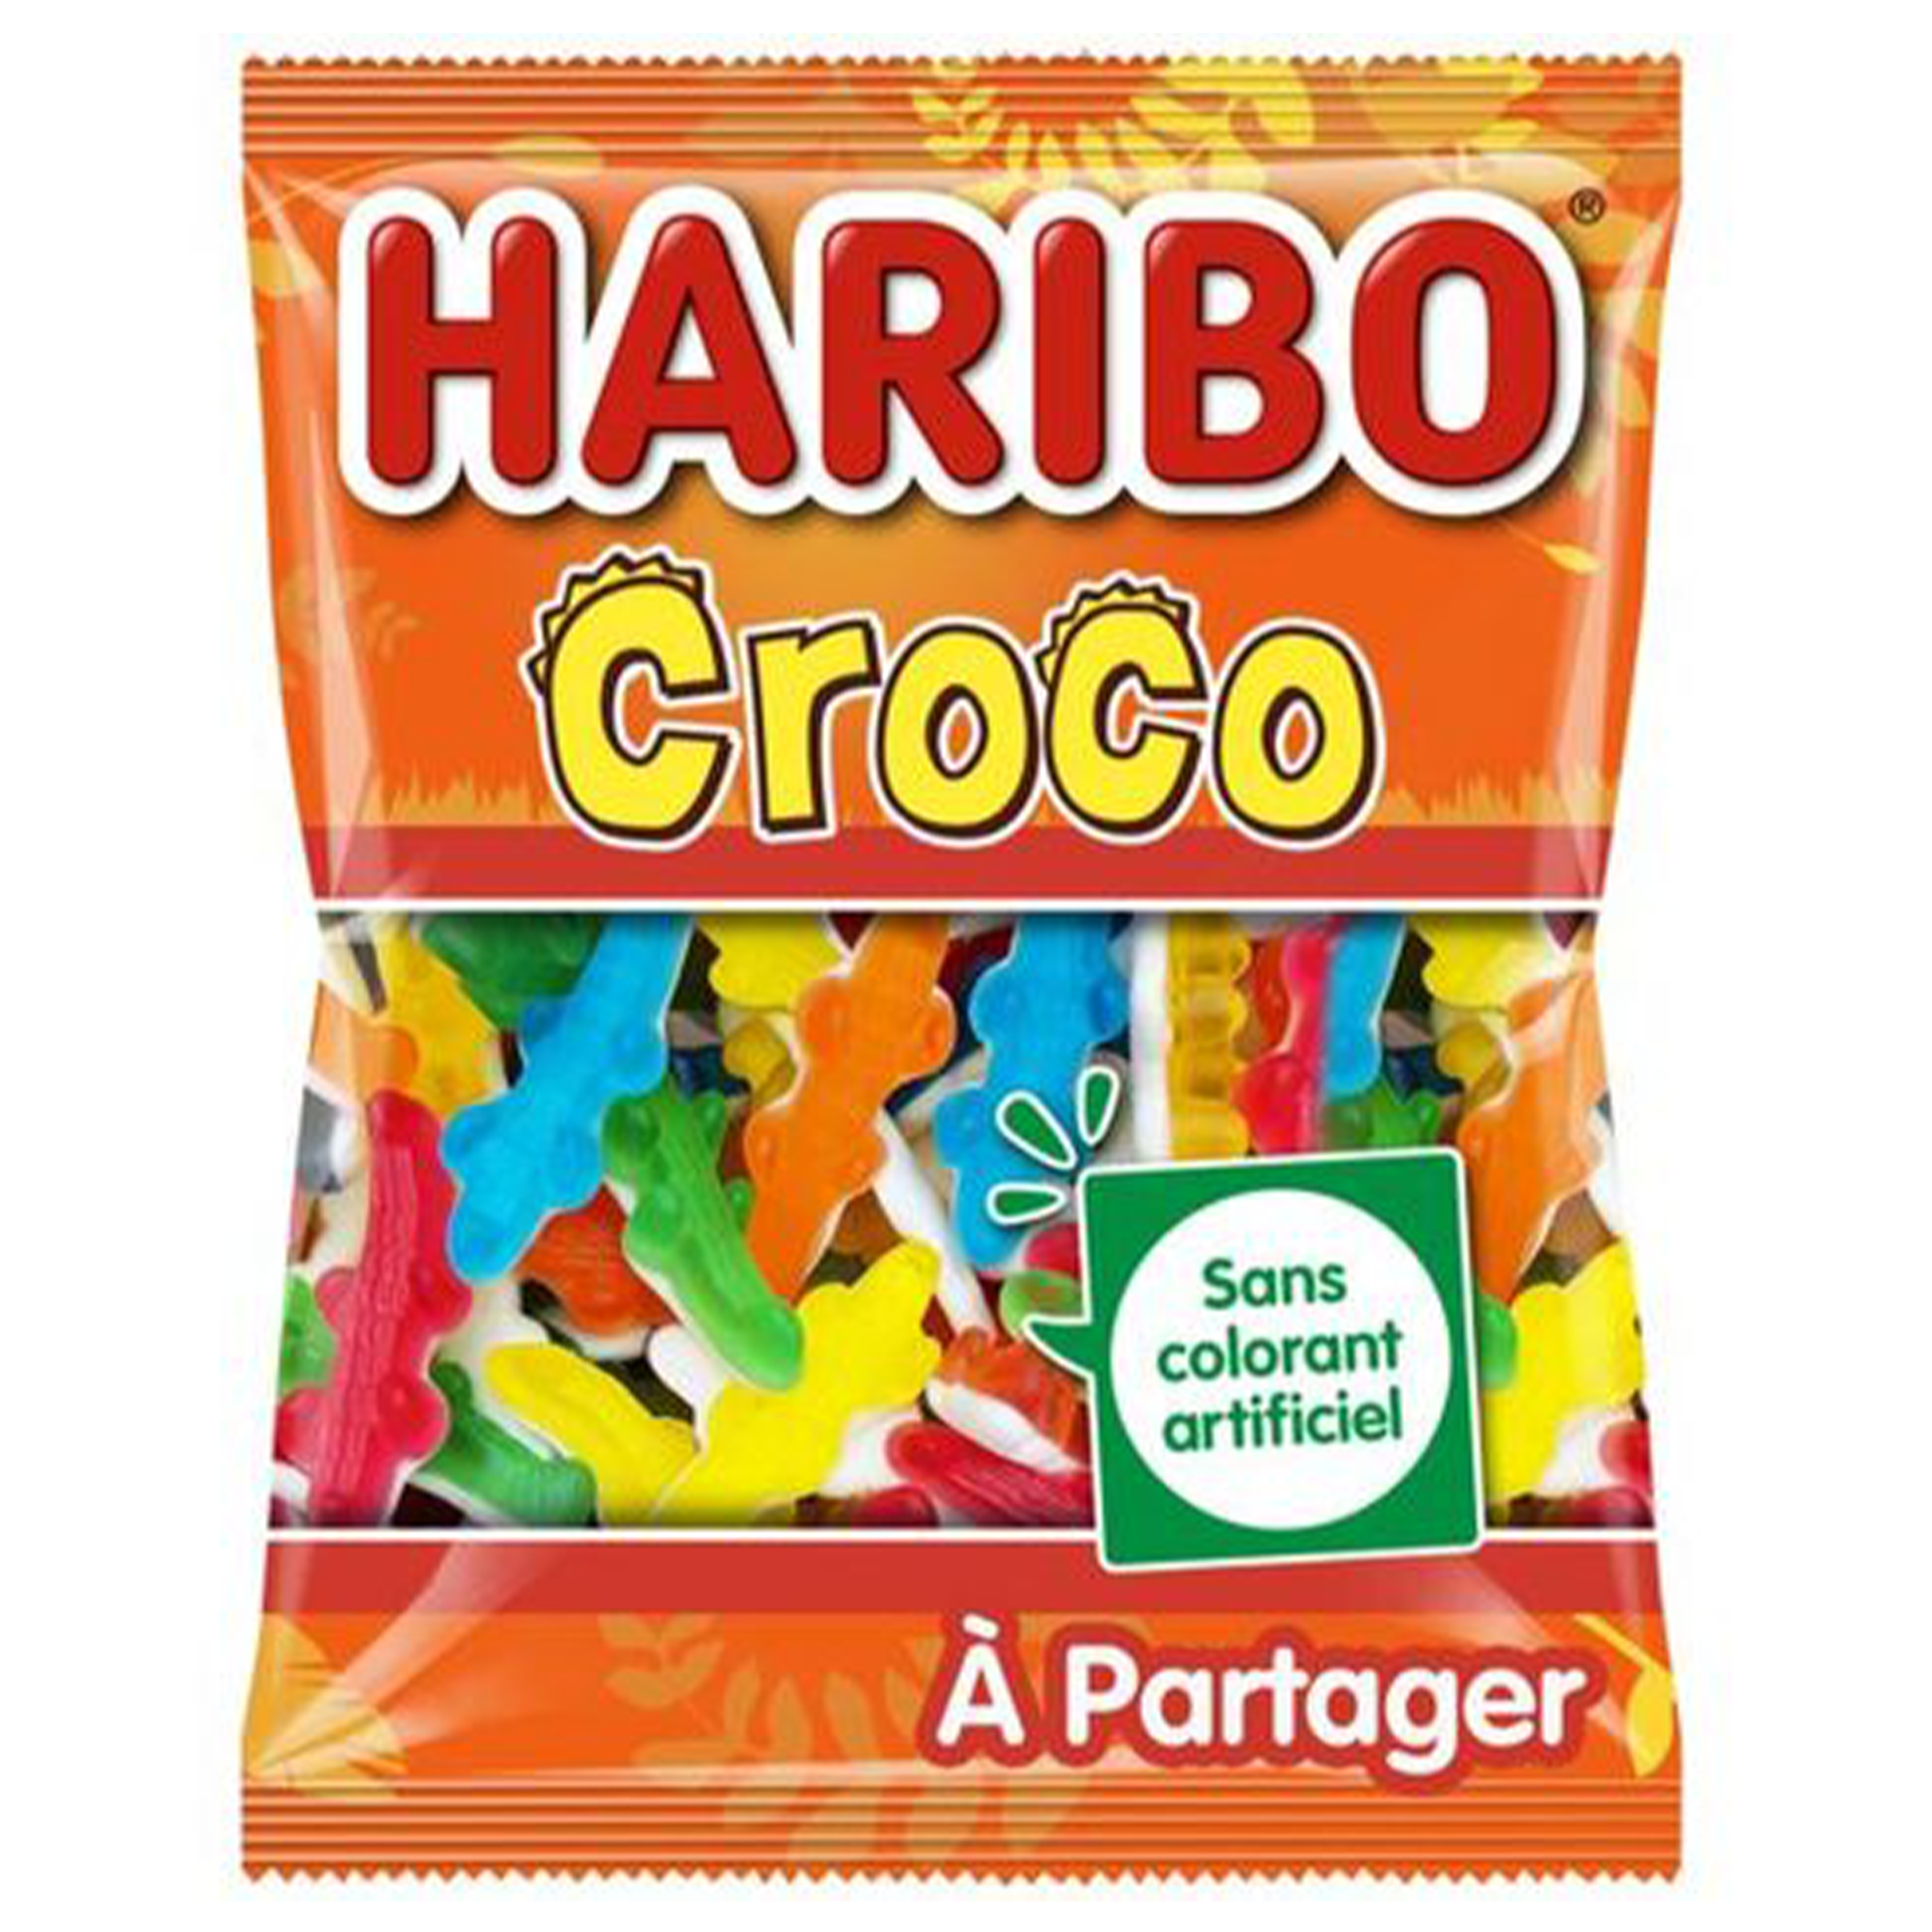 Haribo - Croco (Europe)